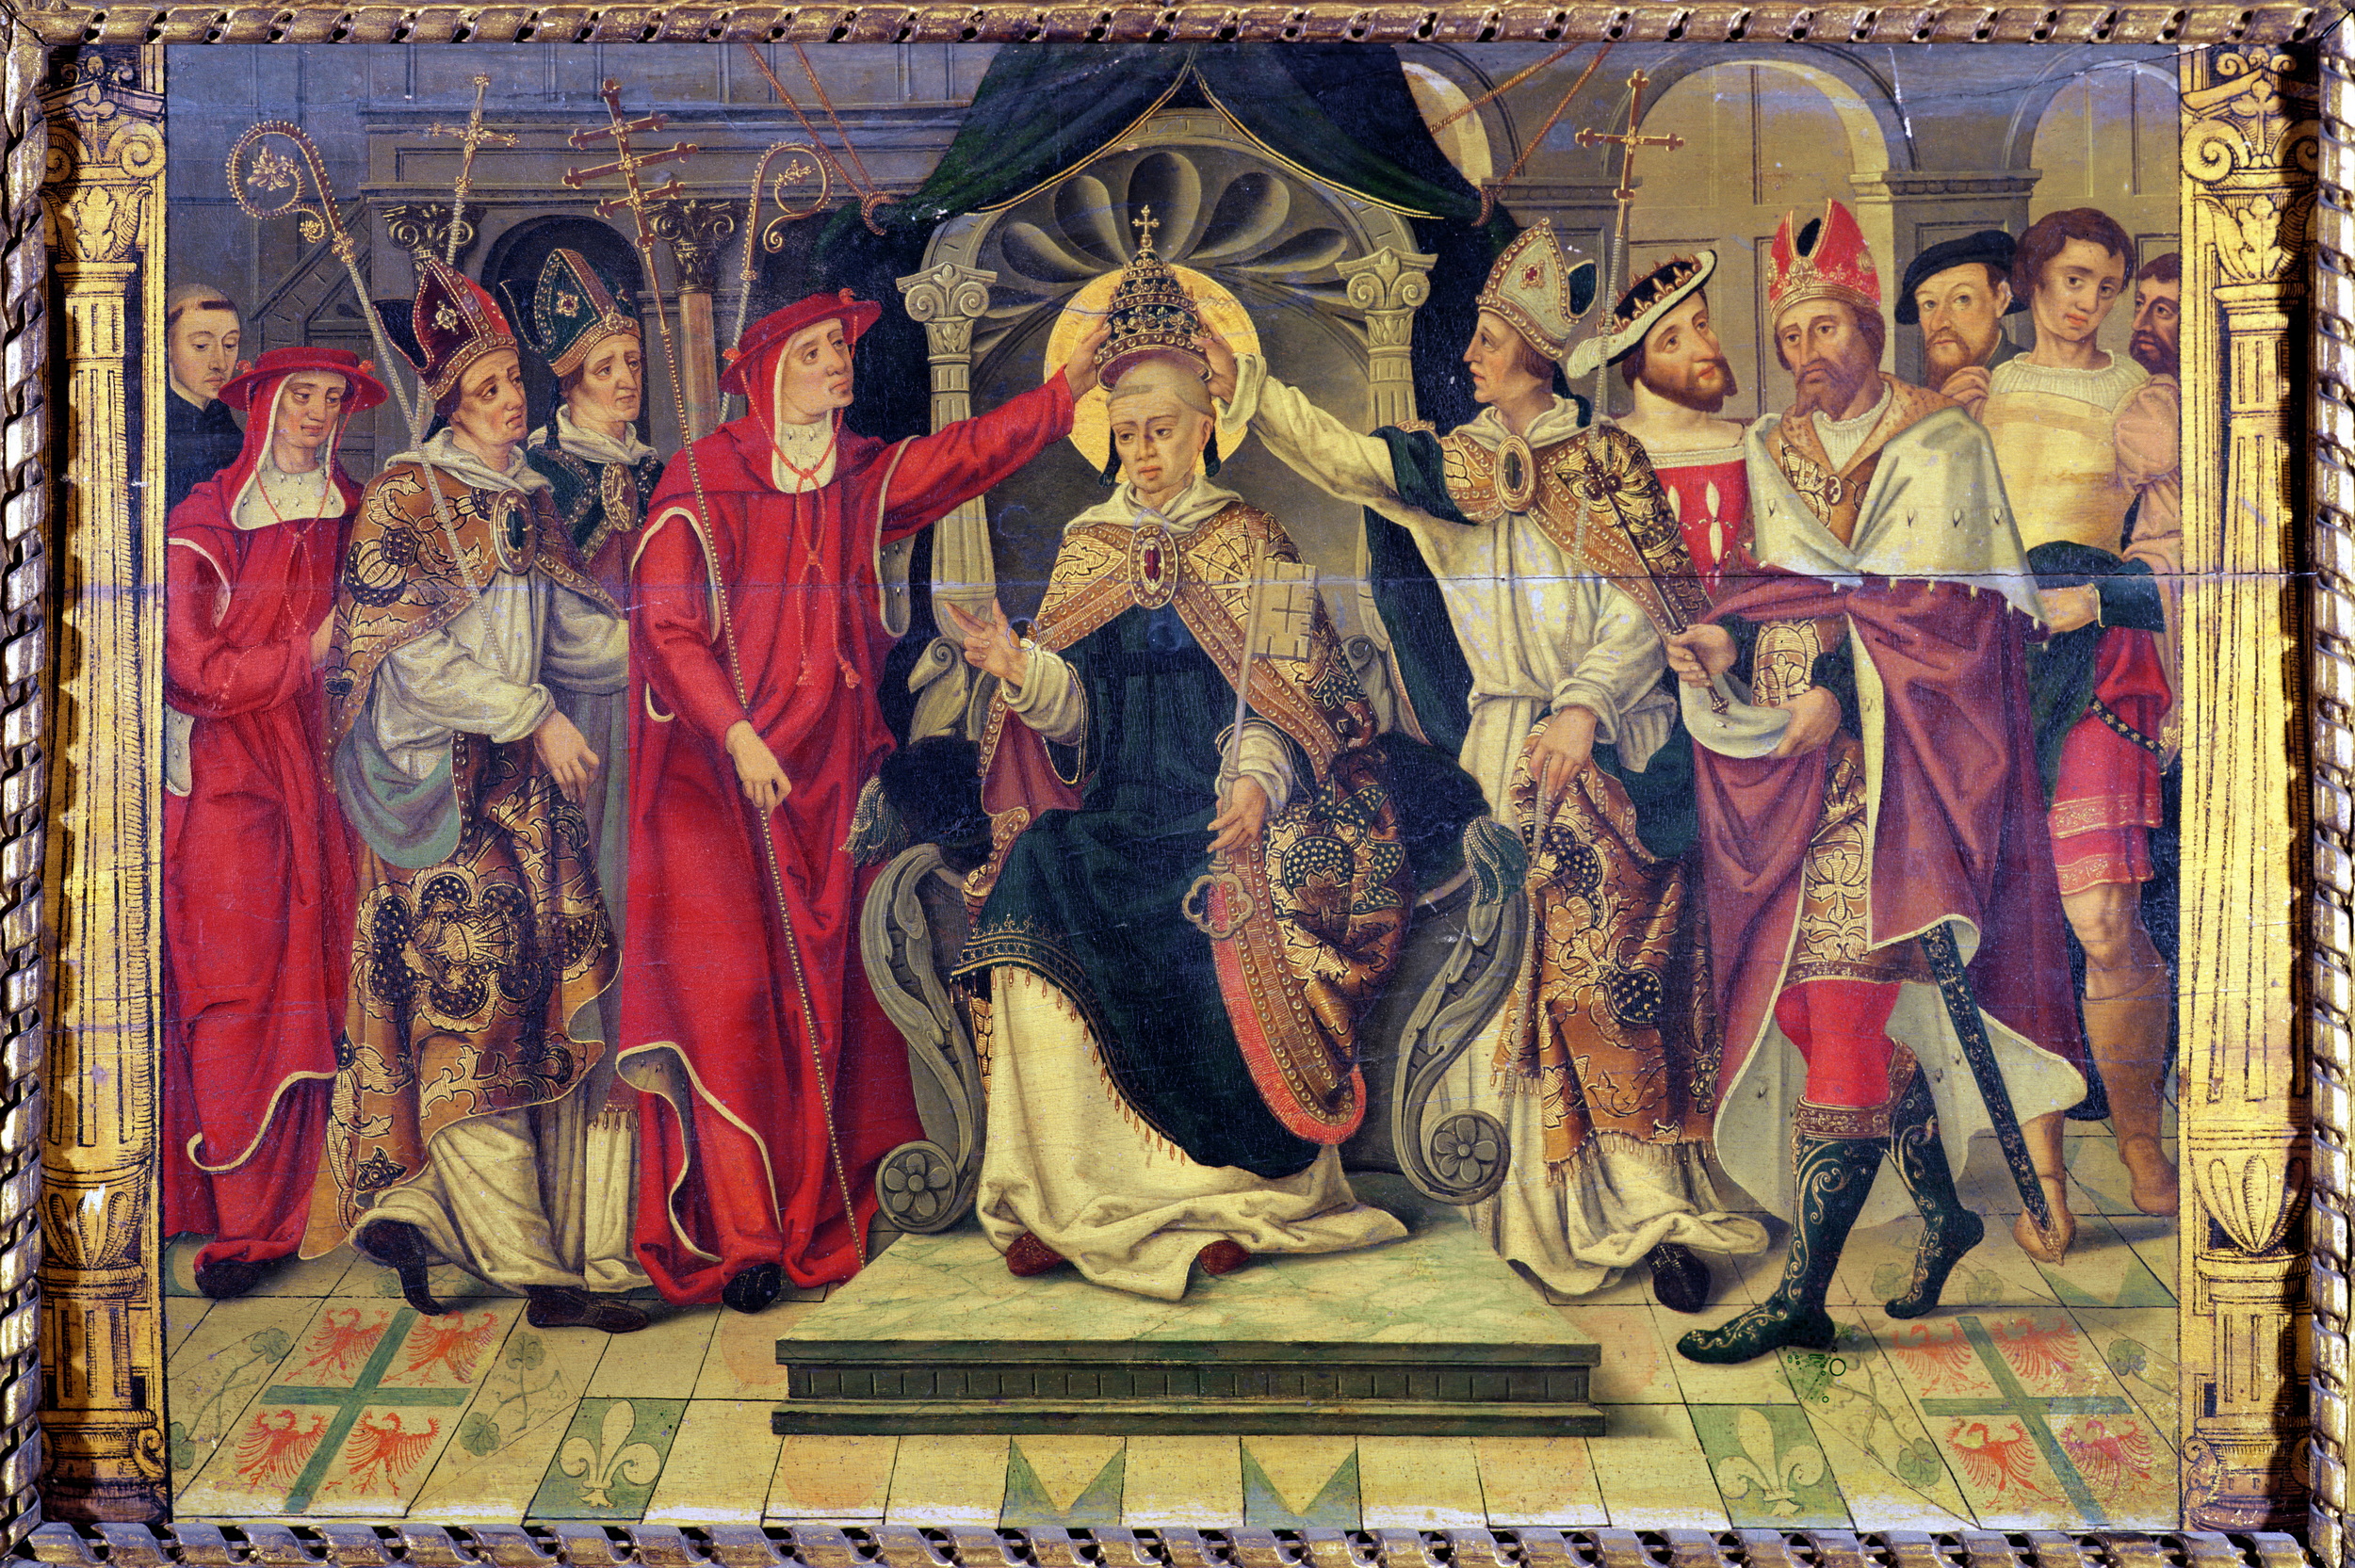 V vi век. Коронация Оттона 1. Папа Римский в средние века. Папа Римский Средневековая картина.